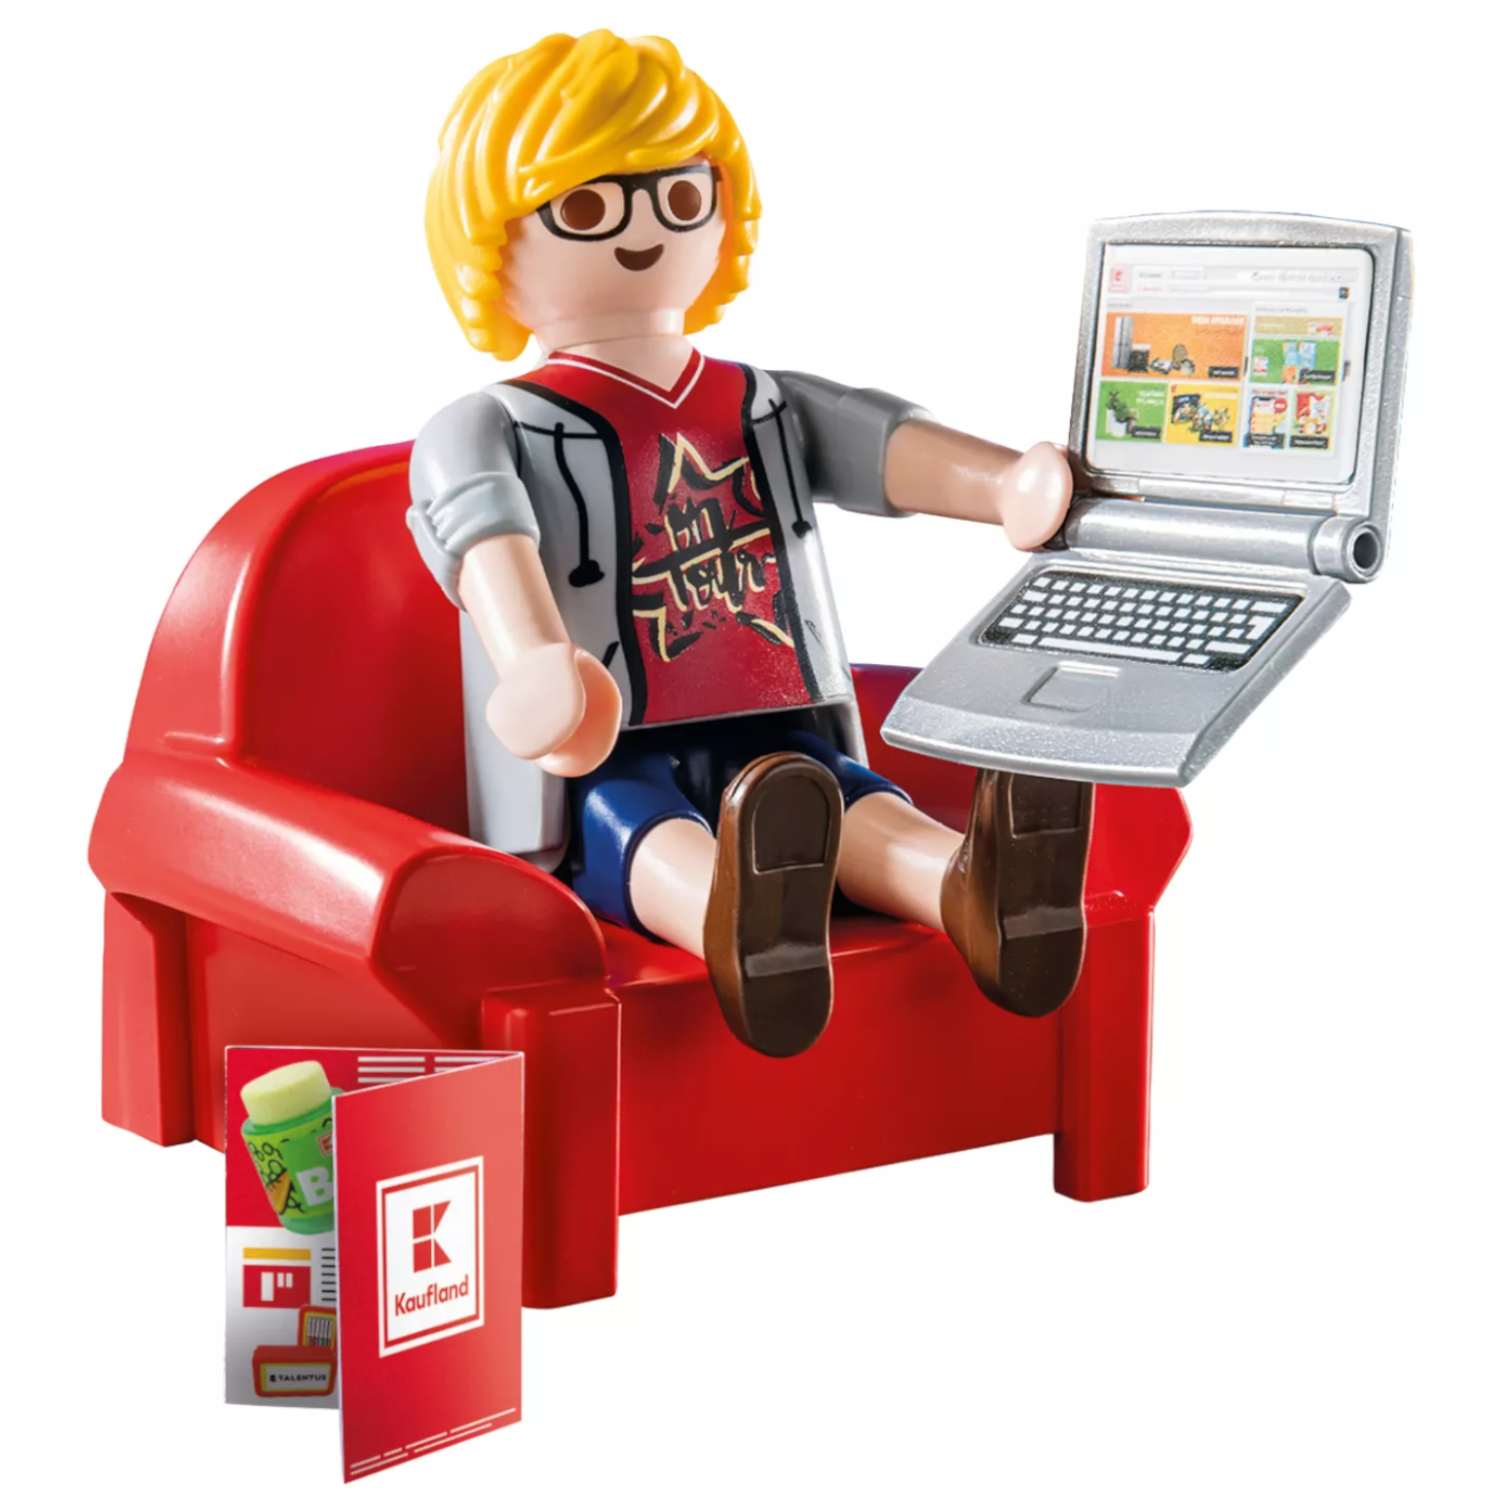 Playmobil 71555 - City Life - Kaufland Onlineshopper Internet Supermarkt